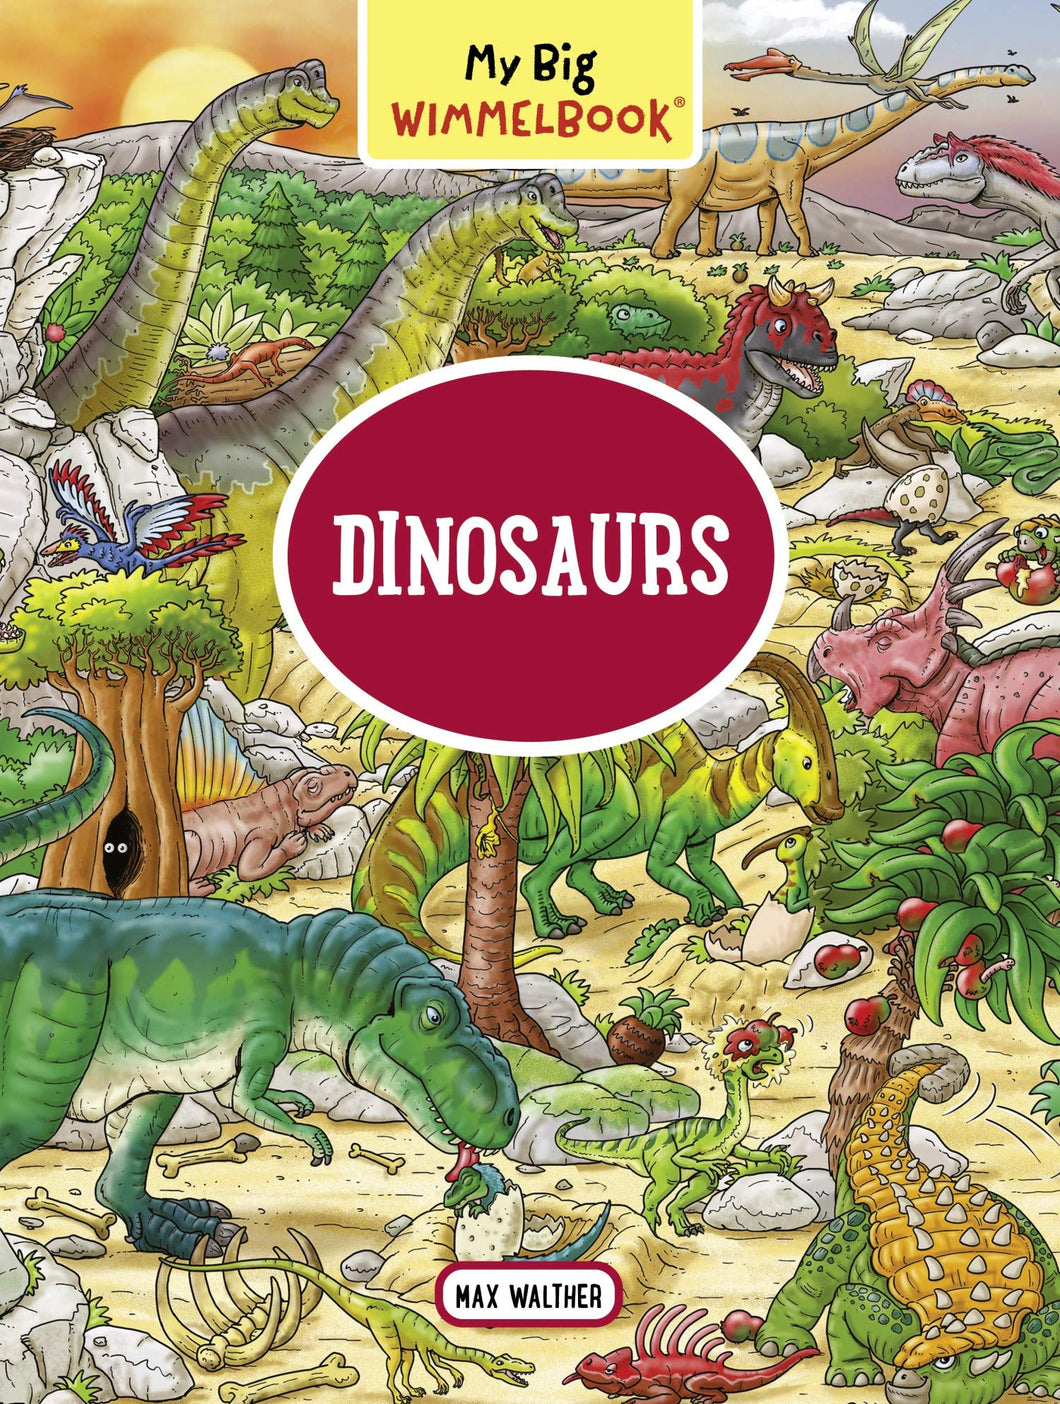 My Big Wimmelbook―Dinosaurs